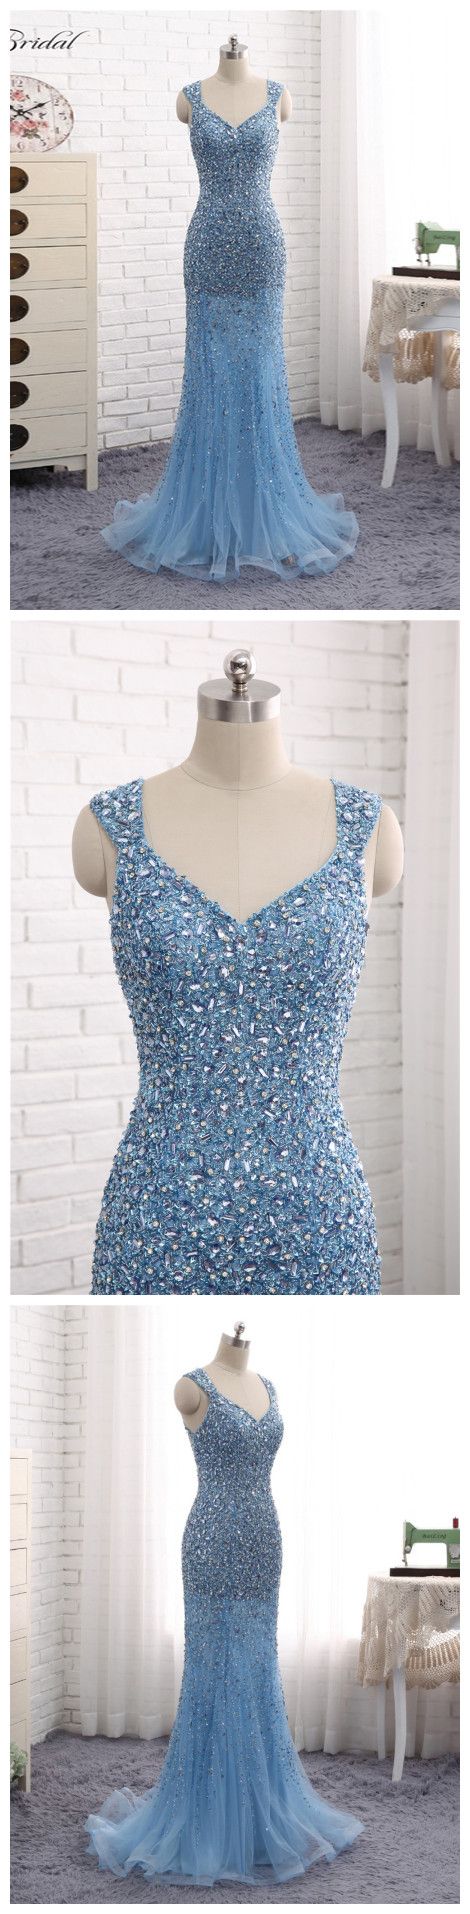 Tulle Light Blue Mermaid Prom Dress, Formal Evening Dress, Women Dress,pd14401